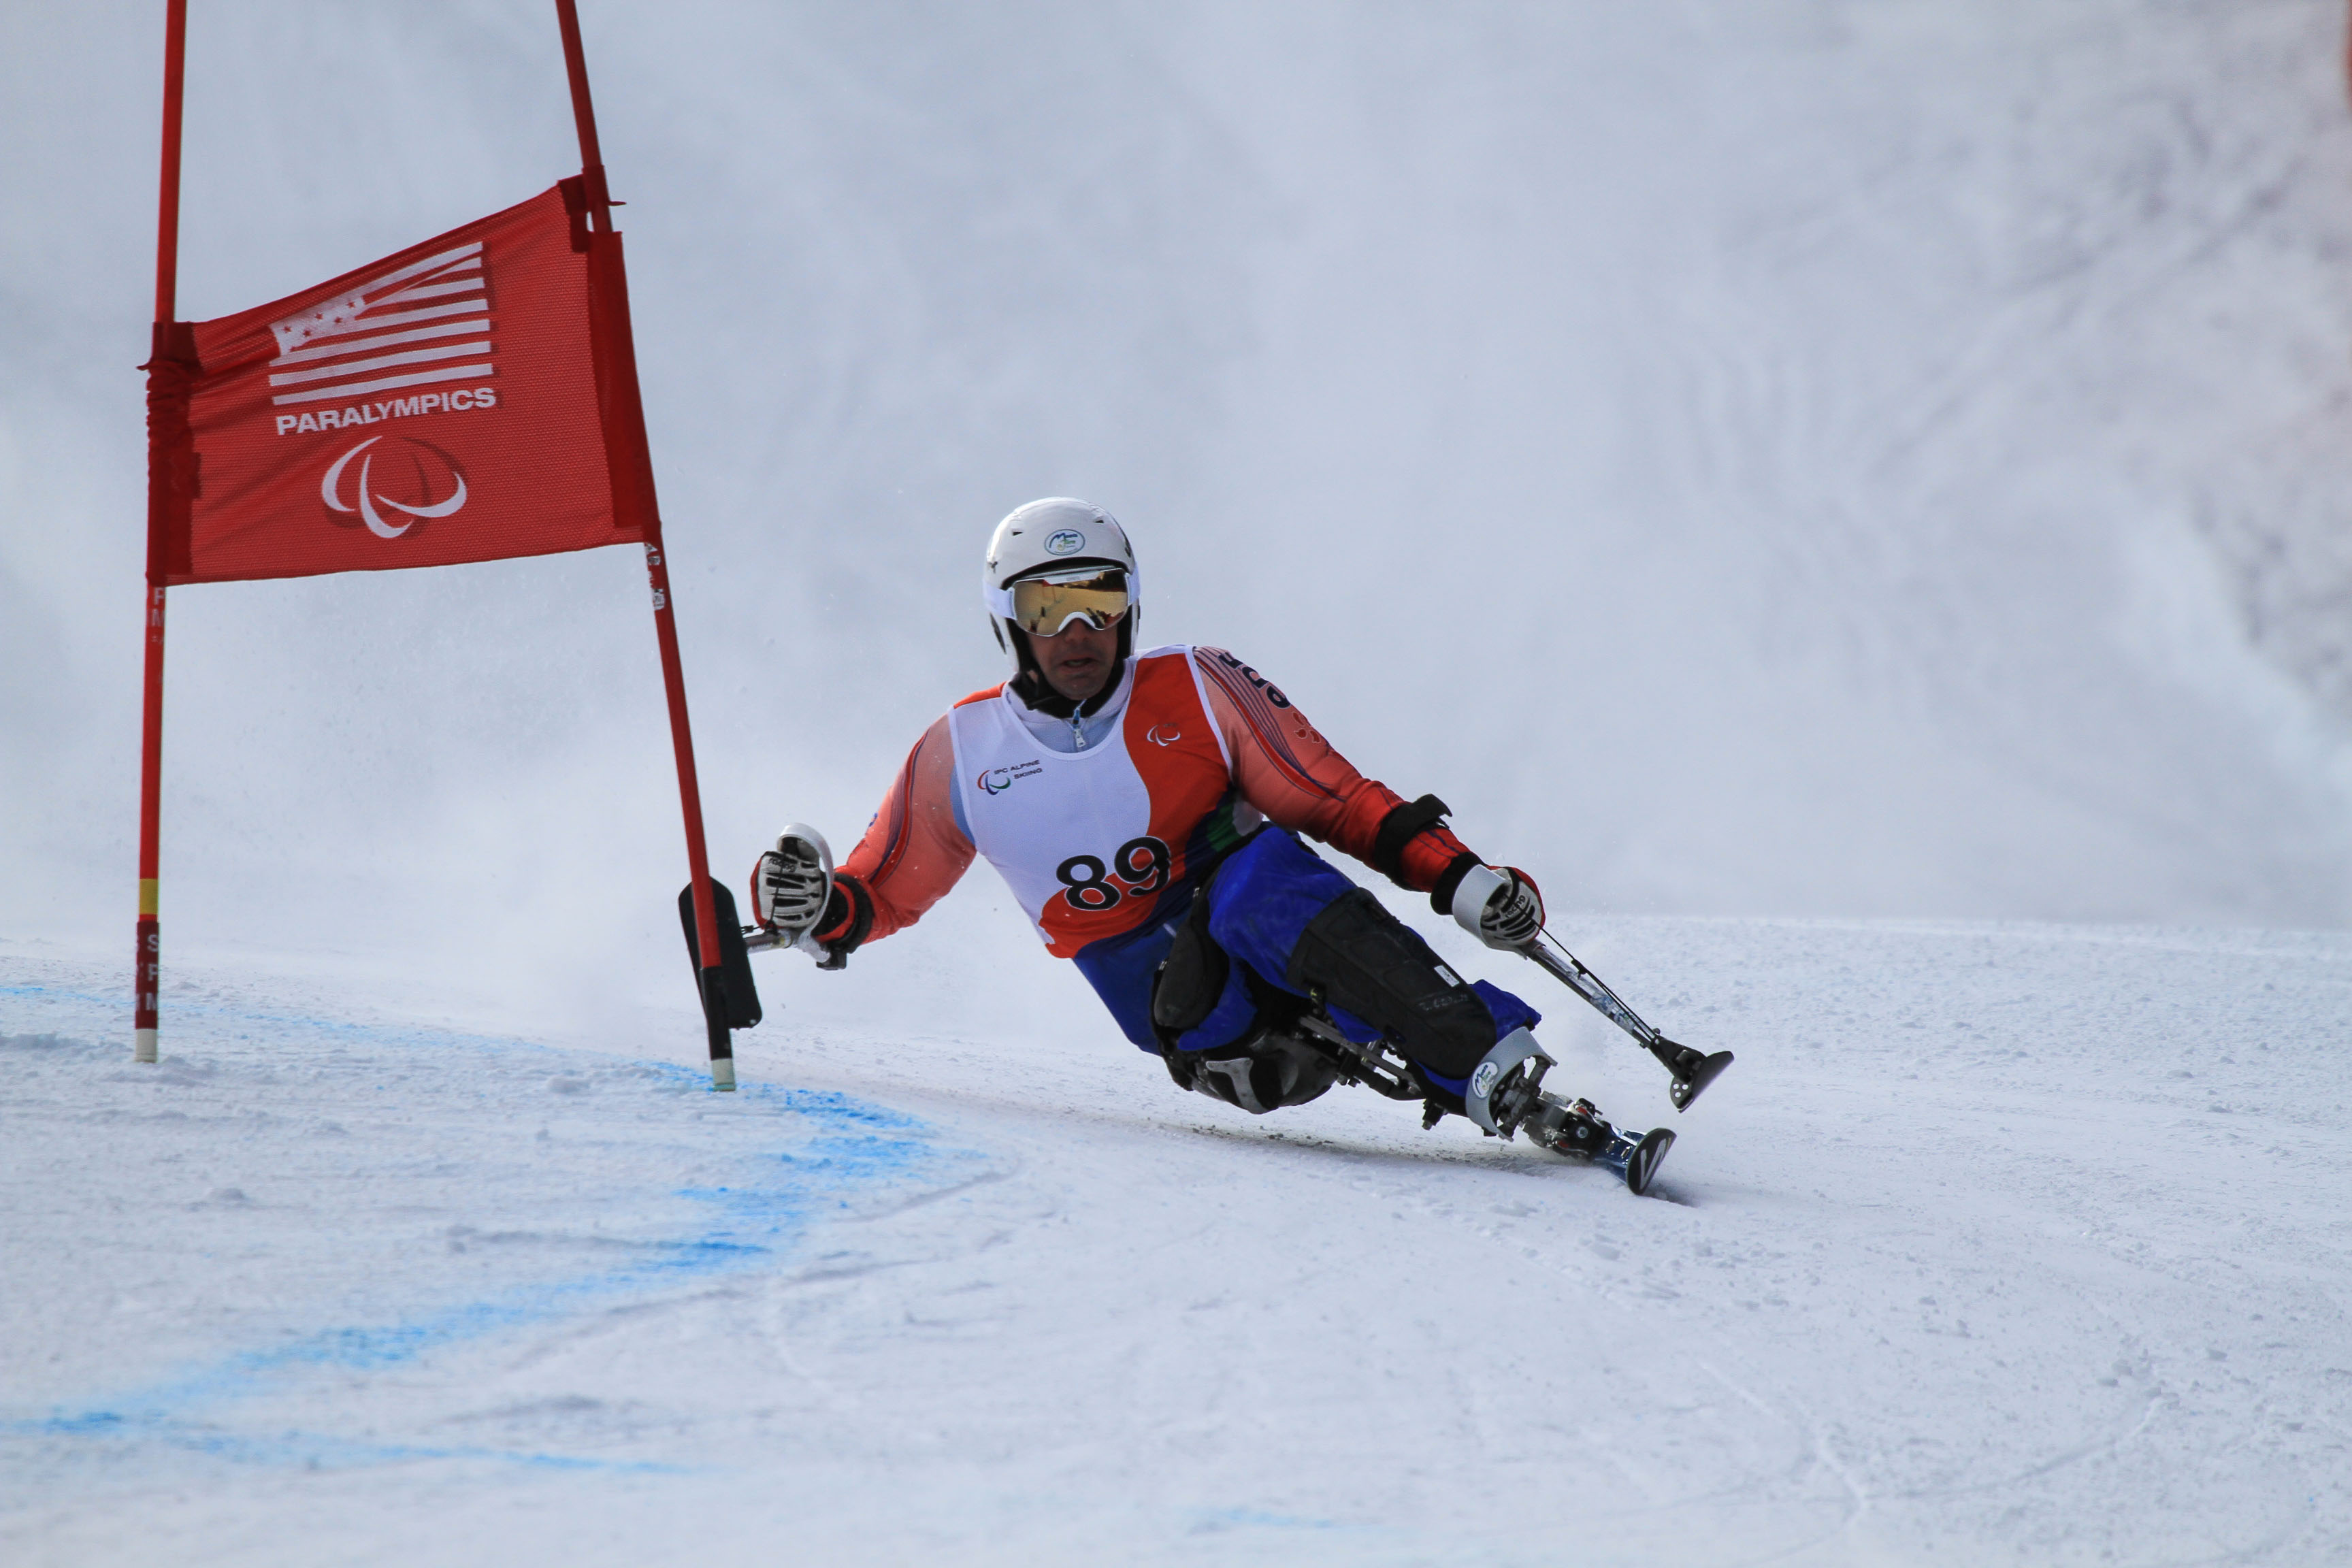 Jean-Yves tackles a giant slalom. Image: @FFH